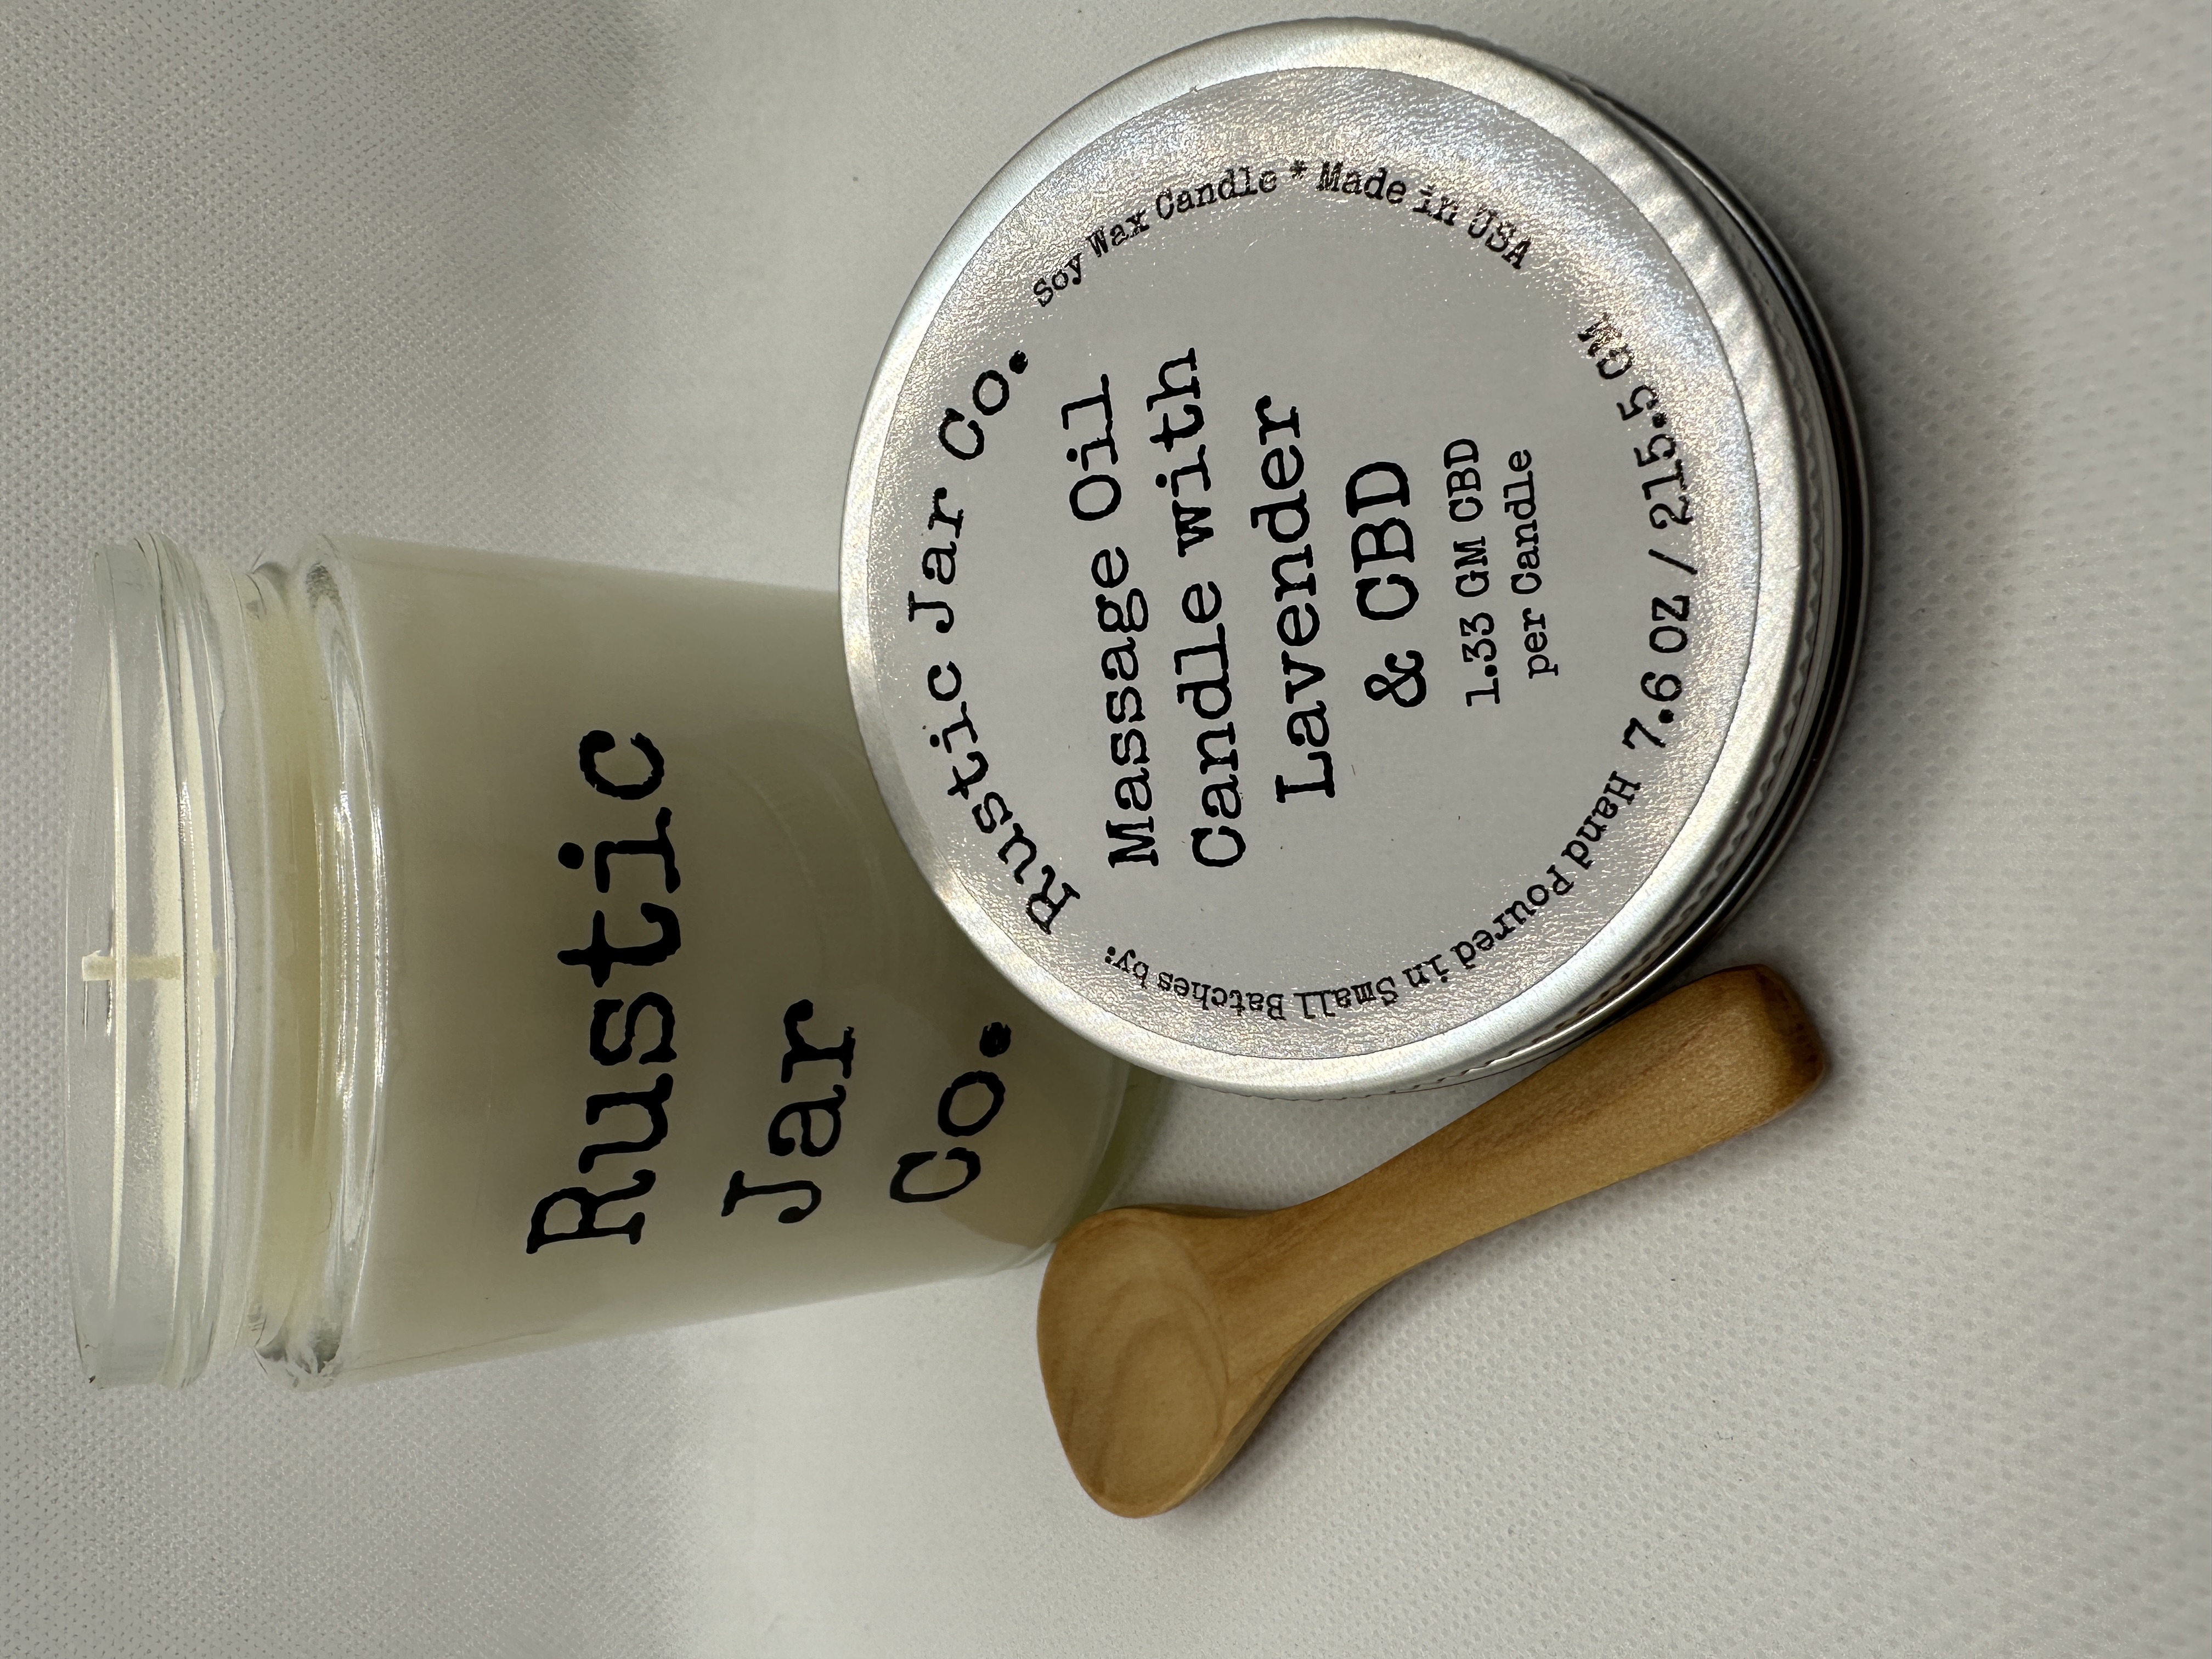 Rustic Jar Company